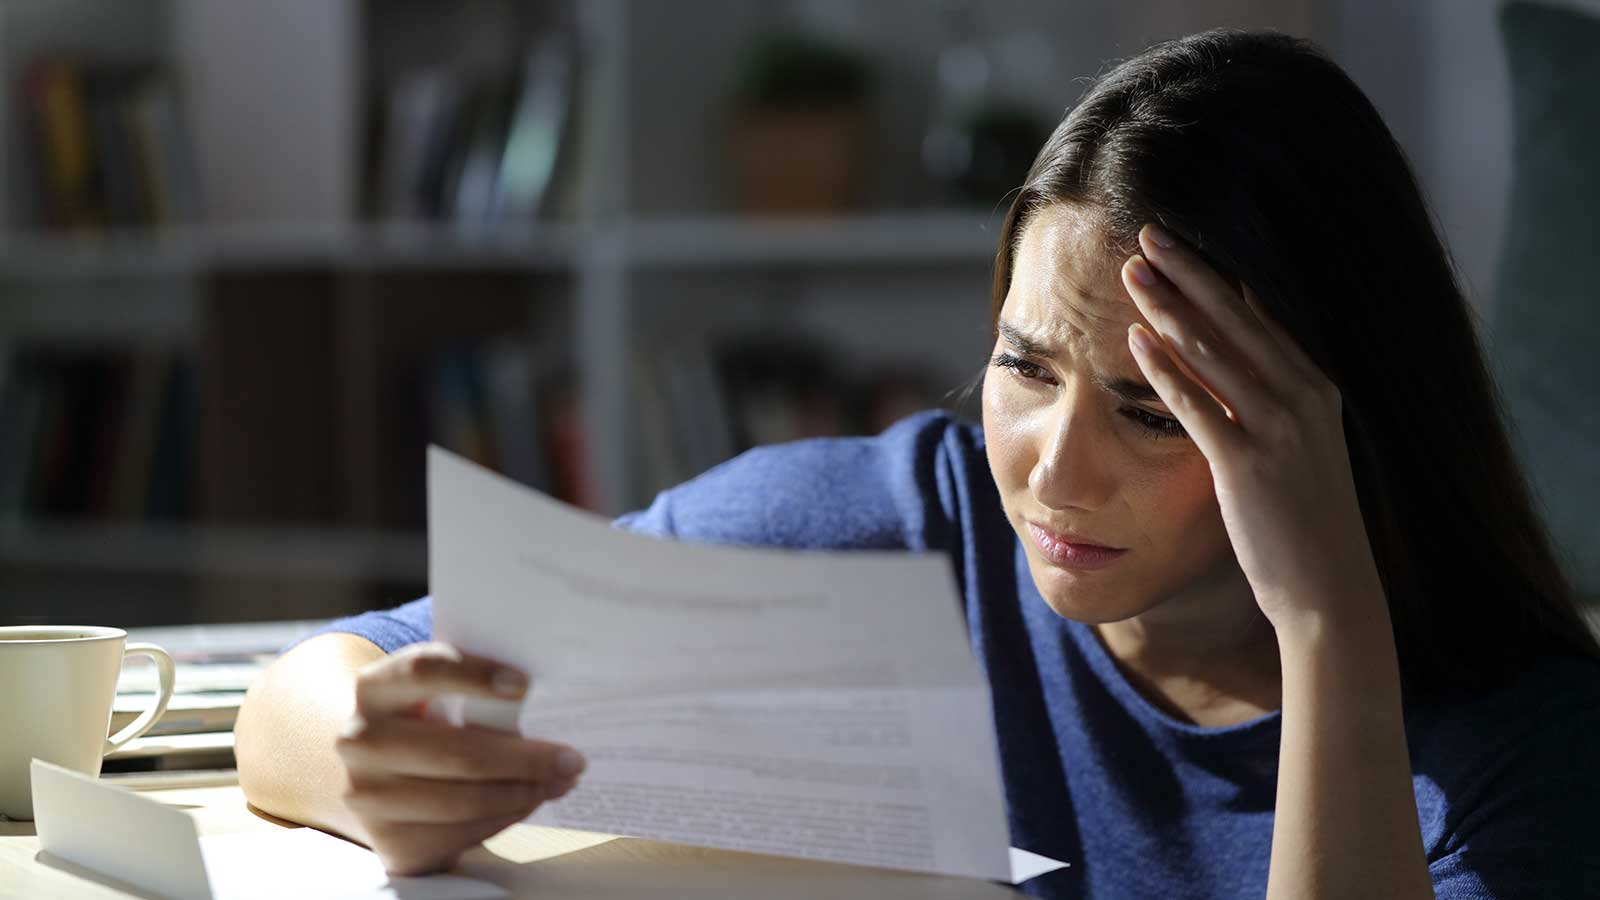 Worried woman reading bad news on letter, l1 visa denial reasons